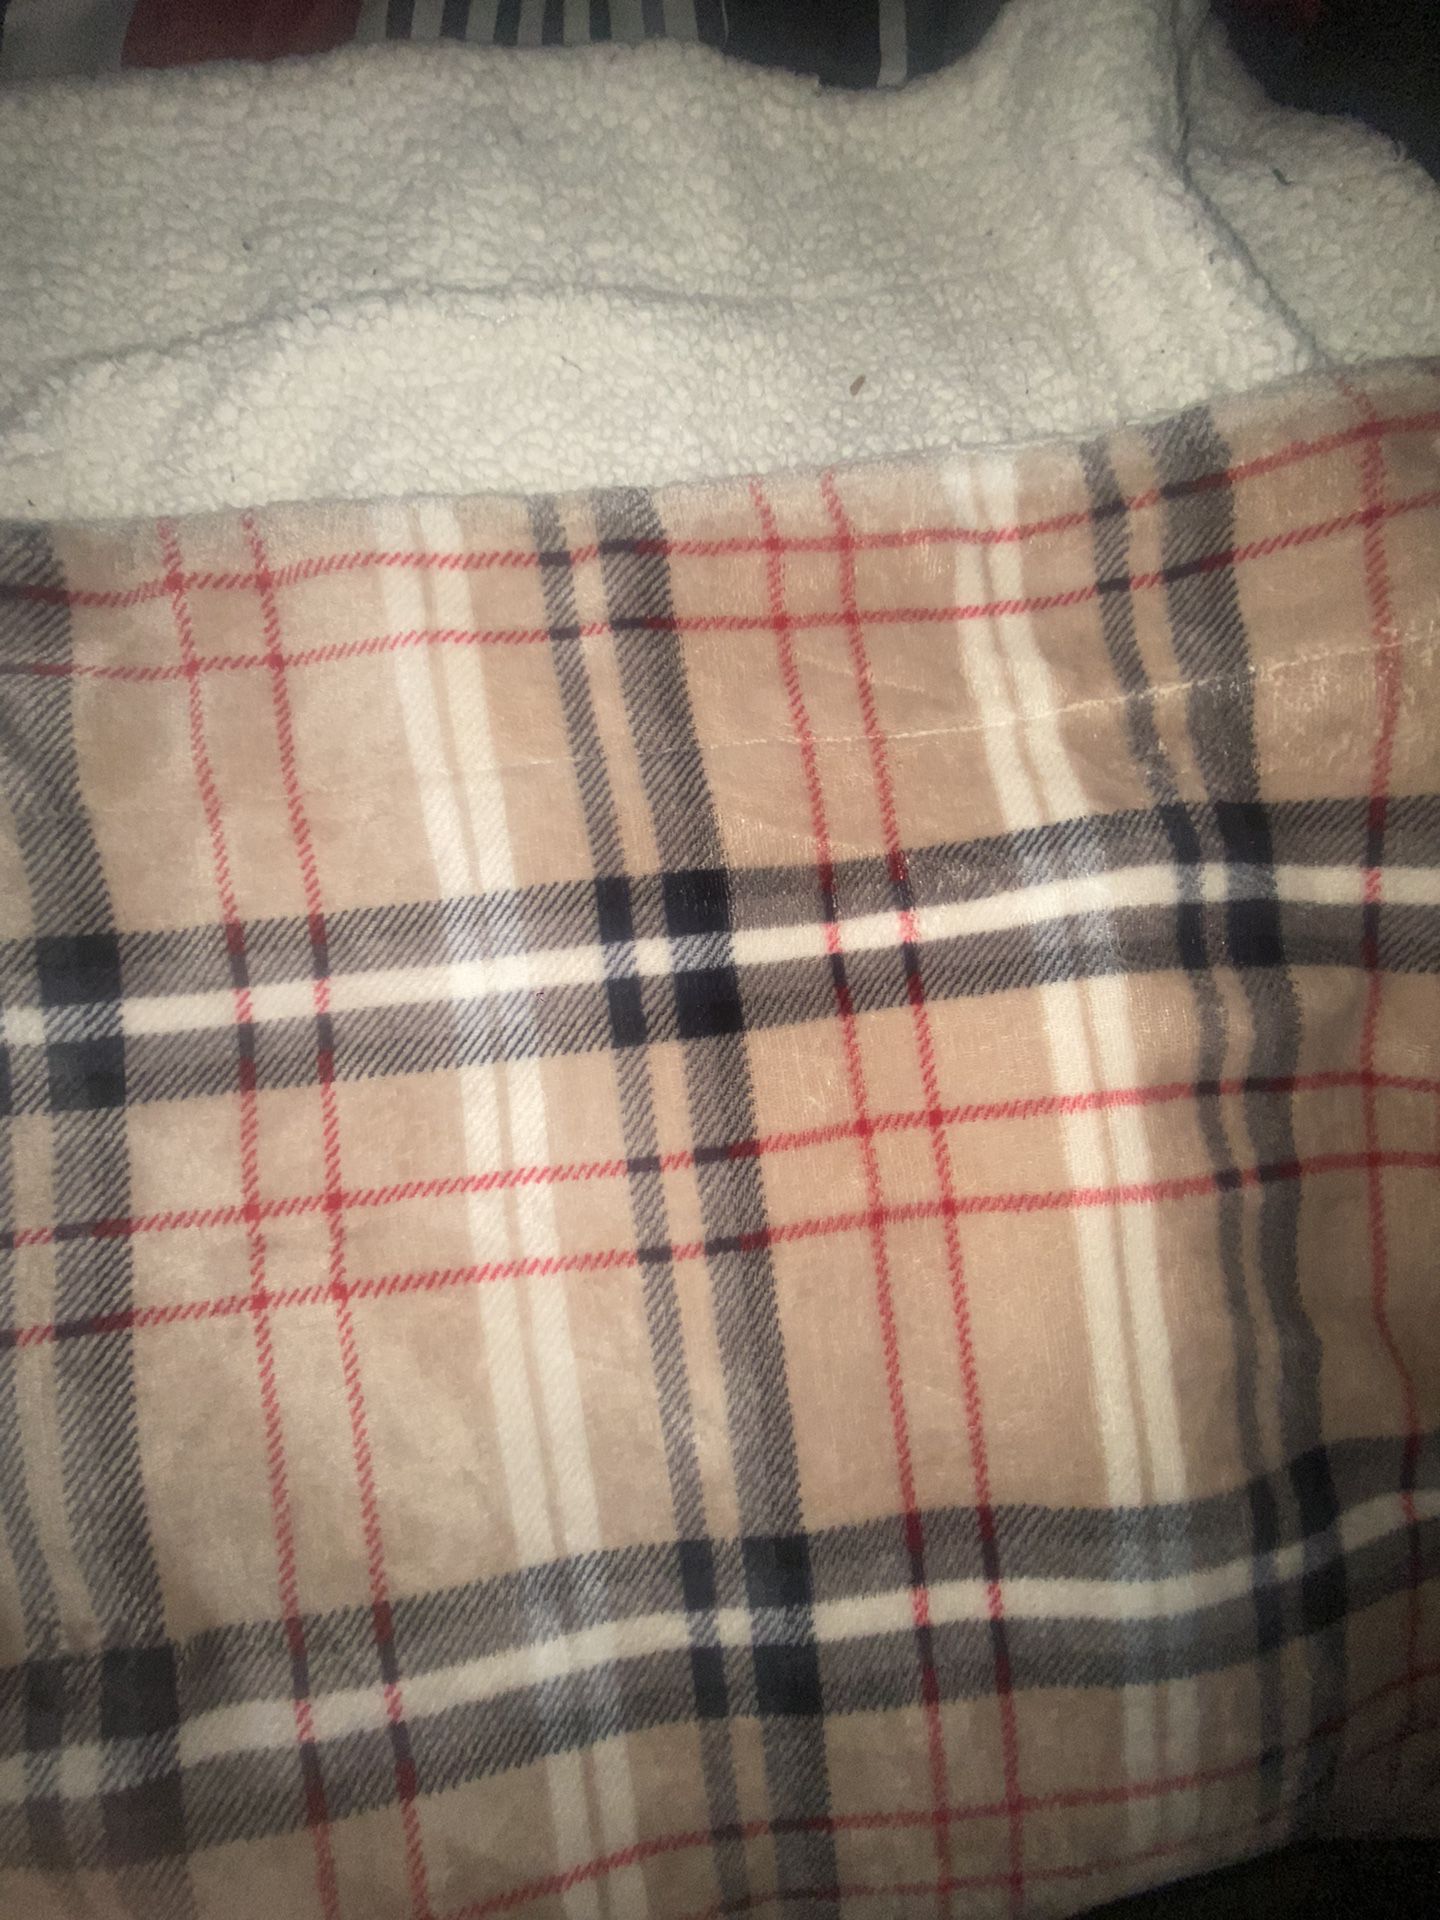 Burberry blanket